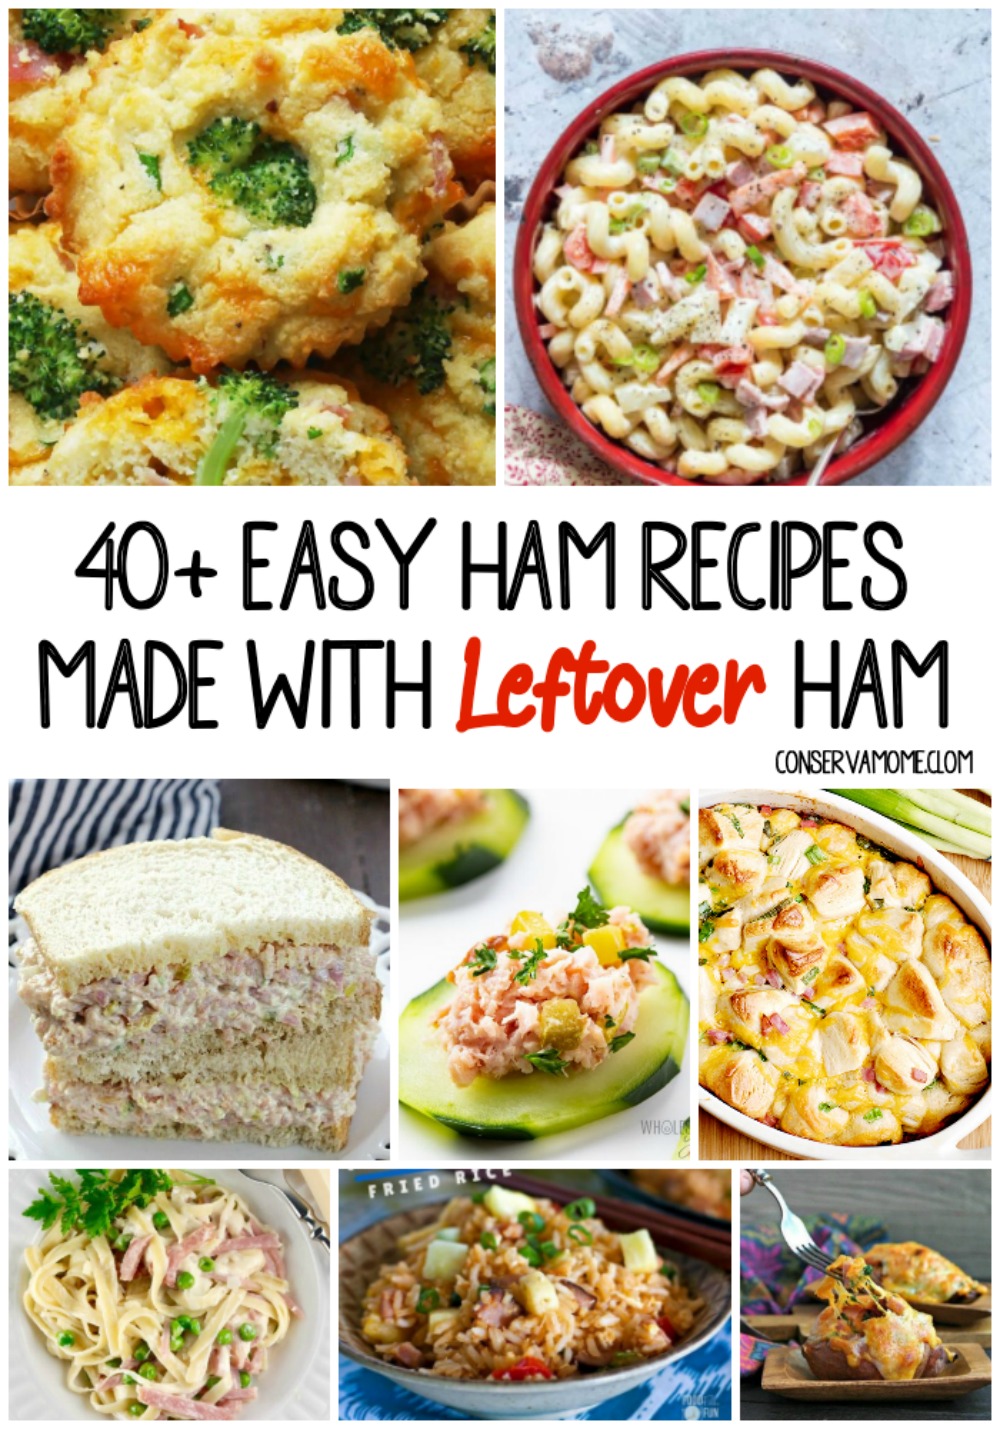 40+ Easy Ham Recipes Made with Leftover Ham